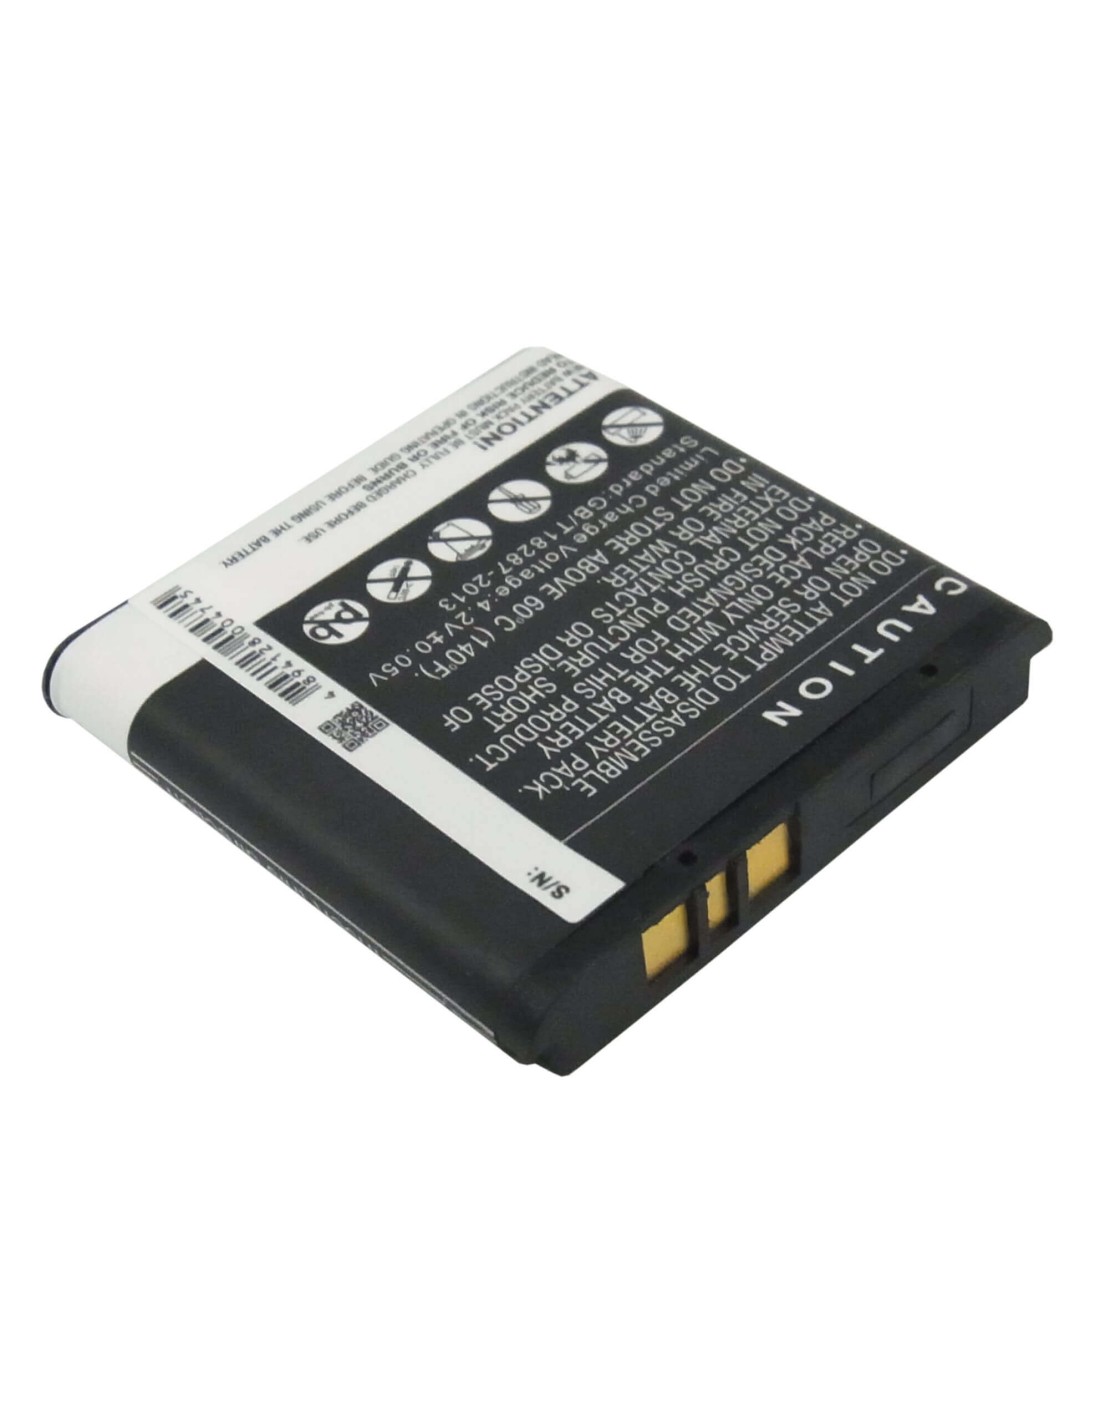 Battery for Nokia 3250, 6280, 9300i 3.7V, 1100mAh - 4.07Wh